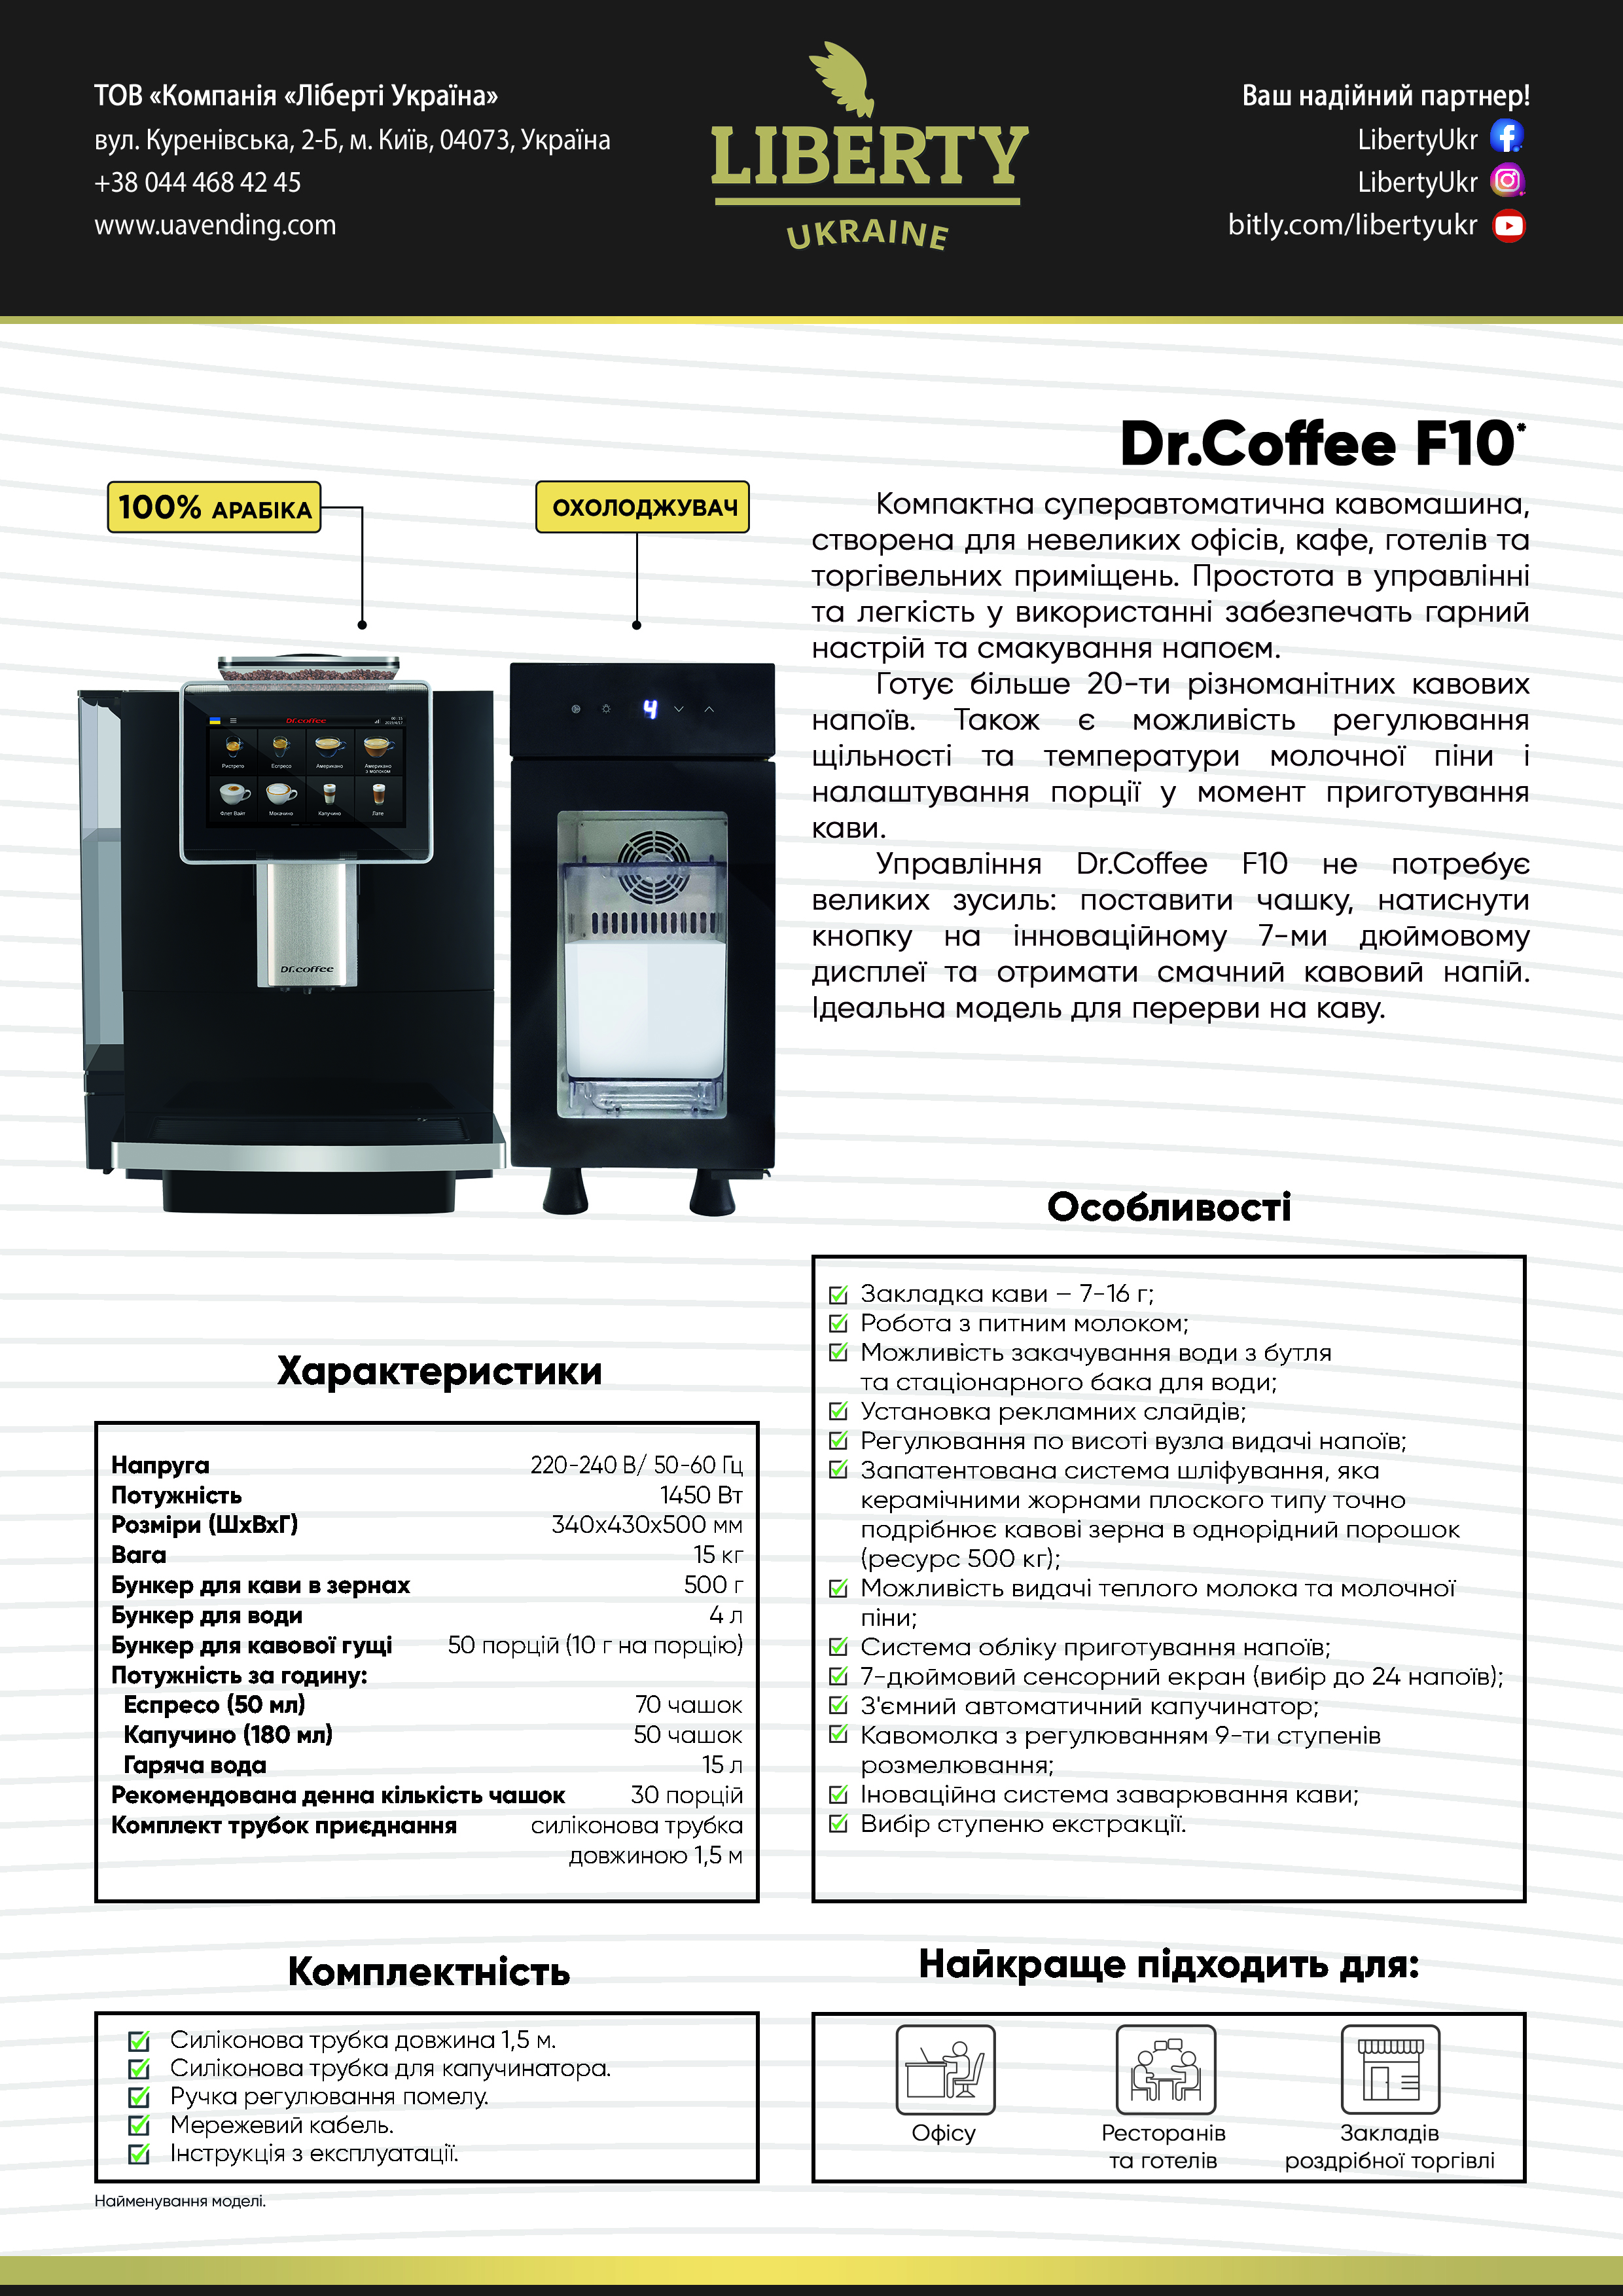 Dr.Coffee_F10